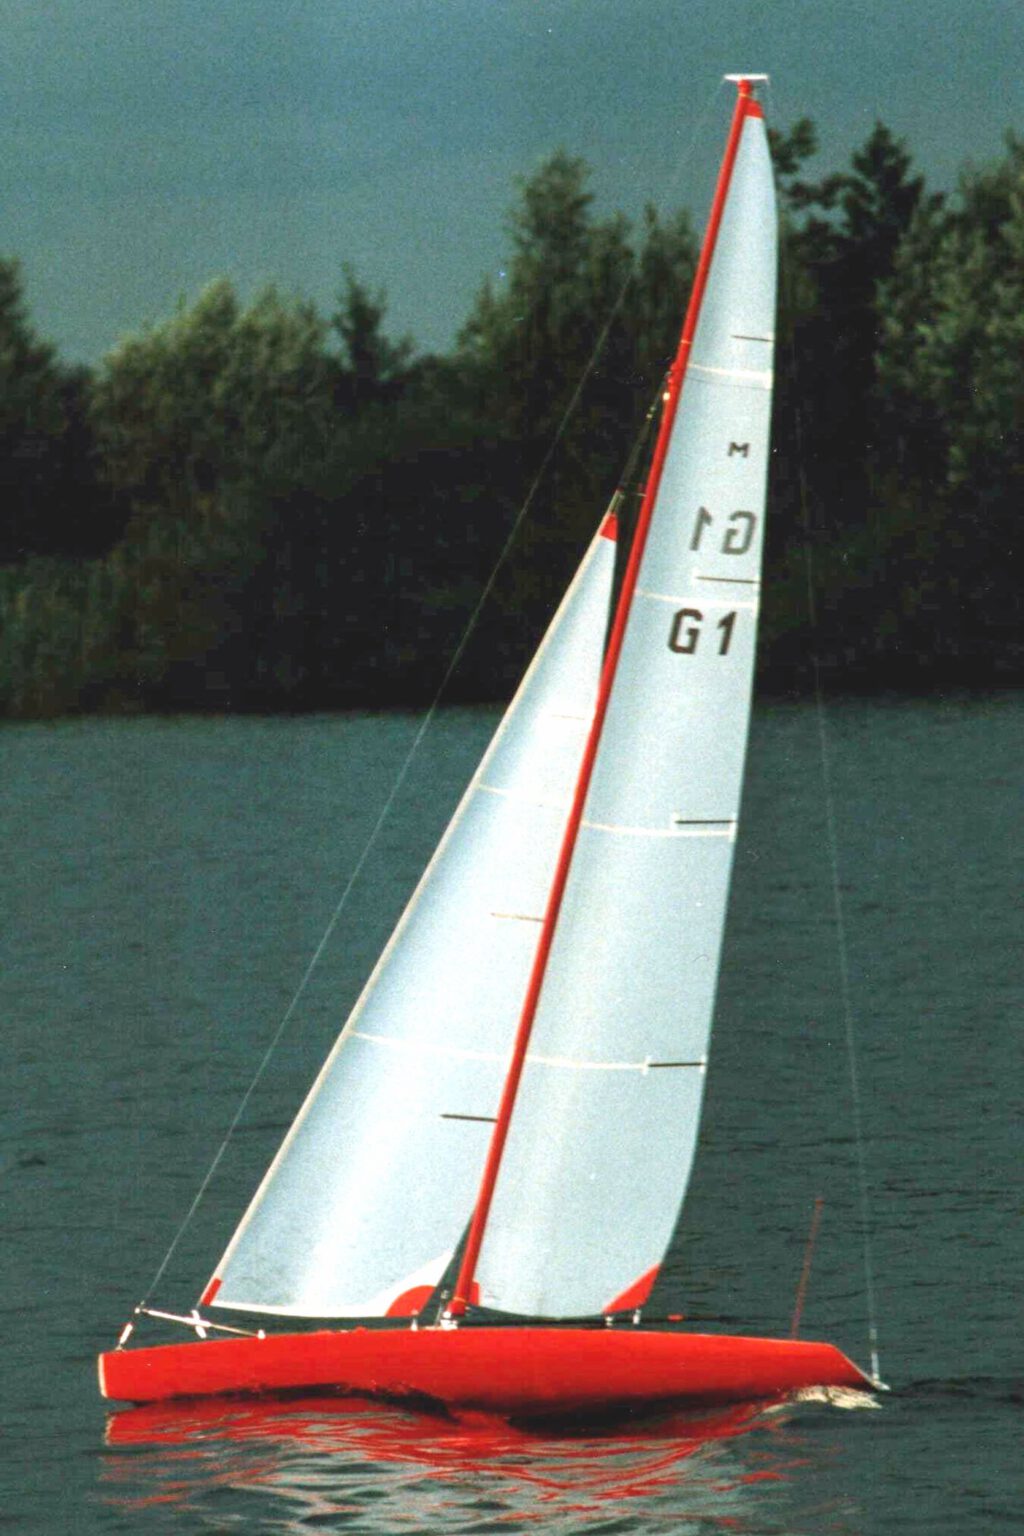 marblehead rc sailboat racing videos